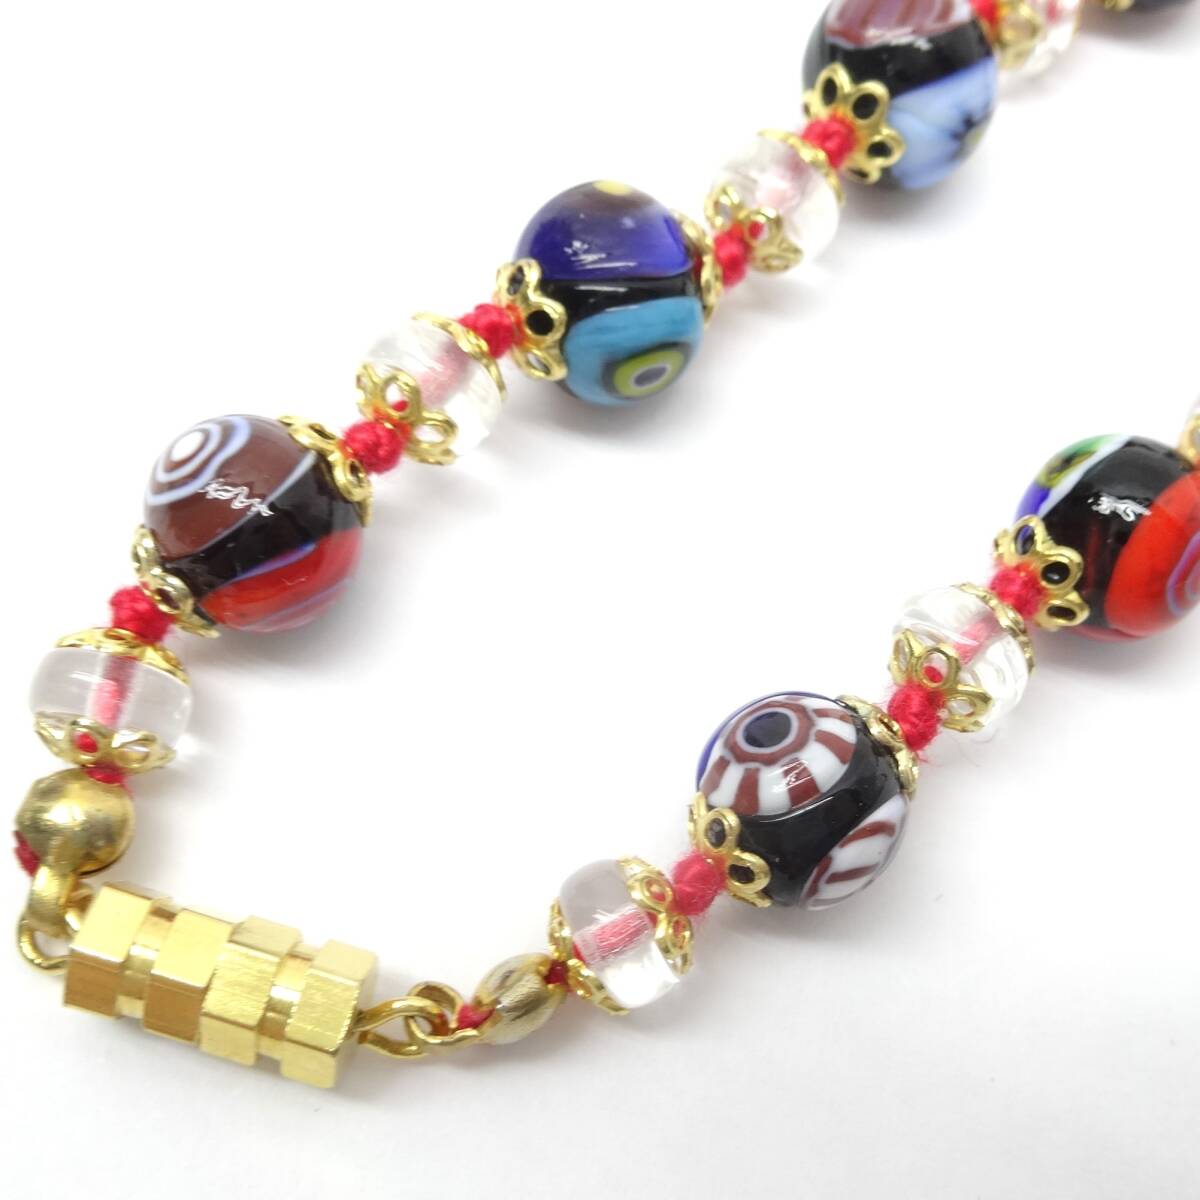 U10 Venetian glass Mill fioli glass skill glass beads necklace tonbodama 